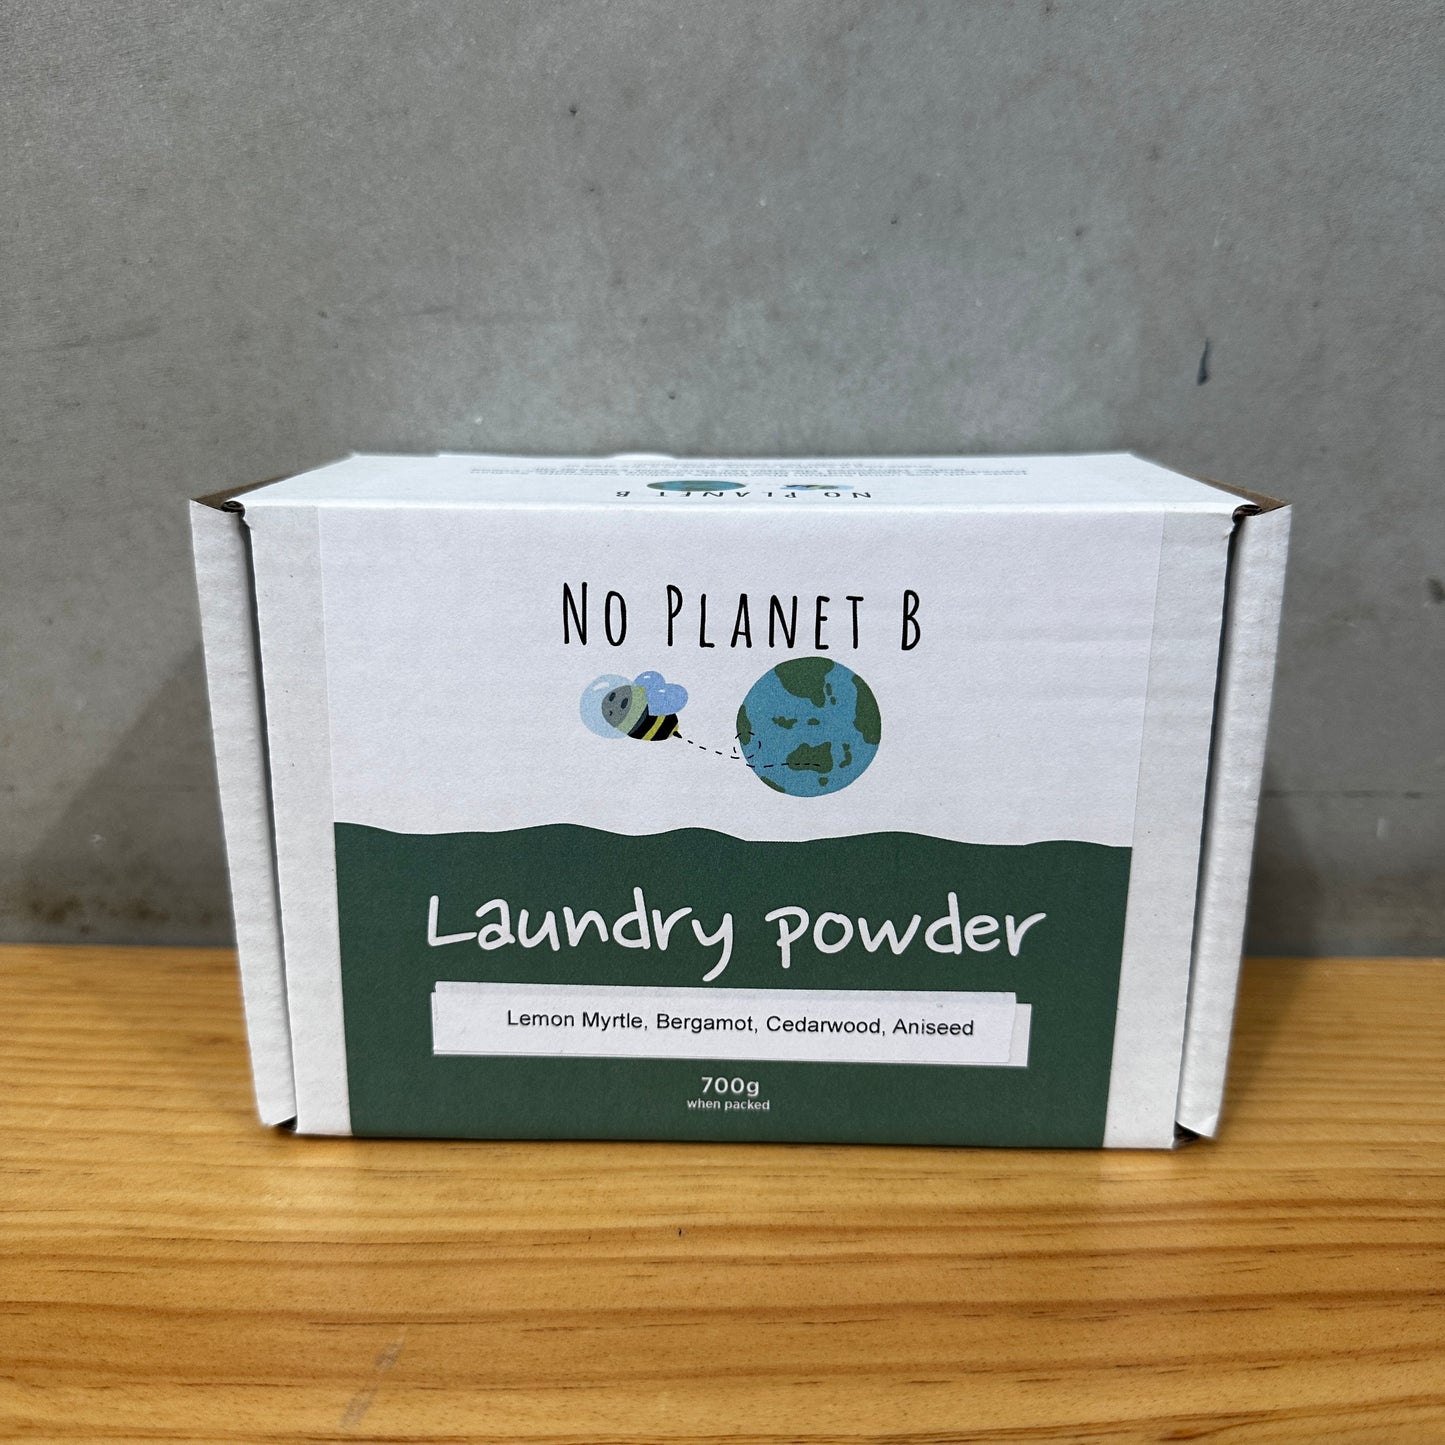 Laundry Powder